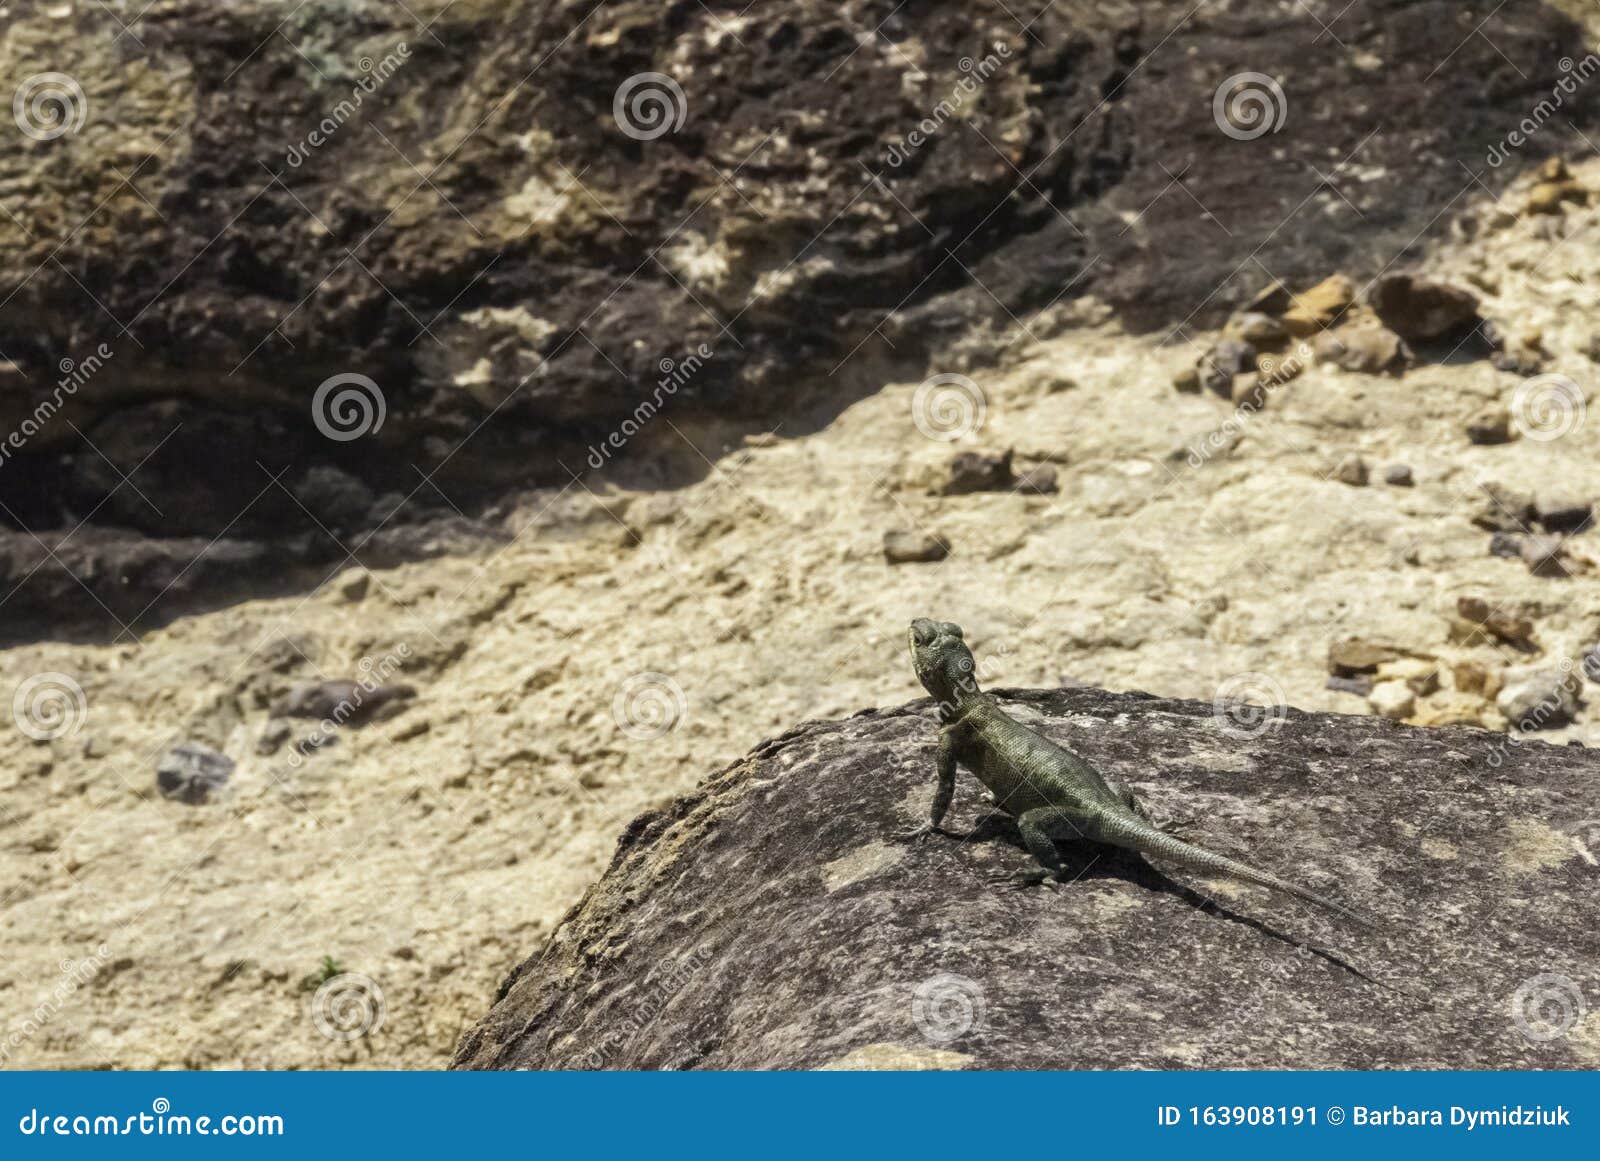 hemidactylus mabouia, a lizard living in venezuela; called commonly tuqueque or limpia casa or lagartija; venezuela